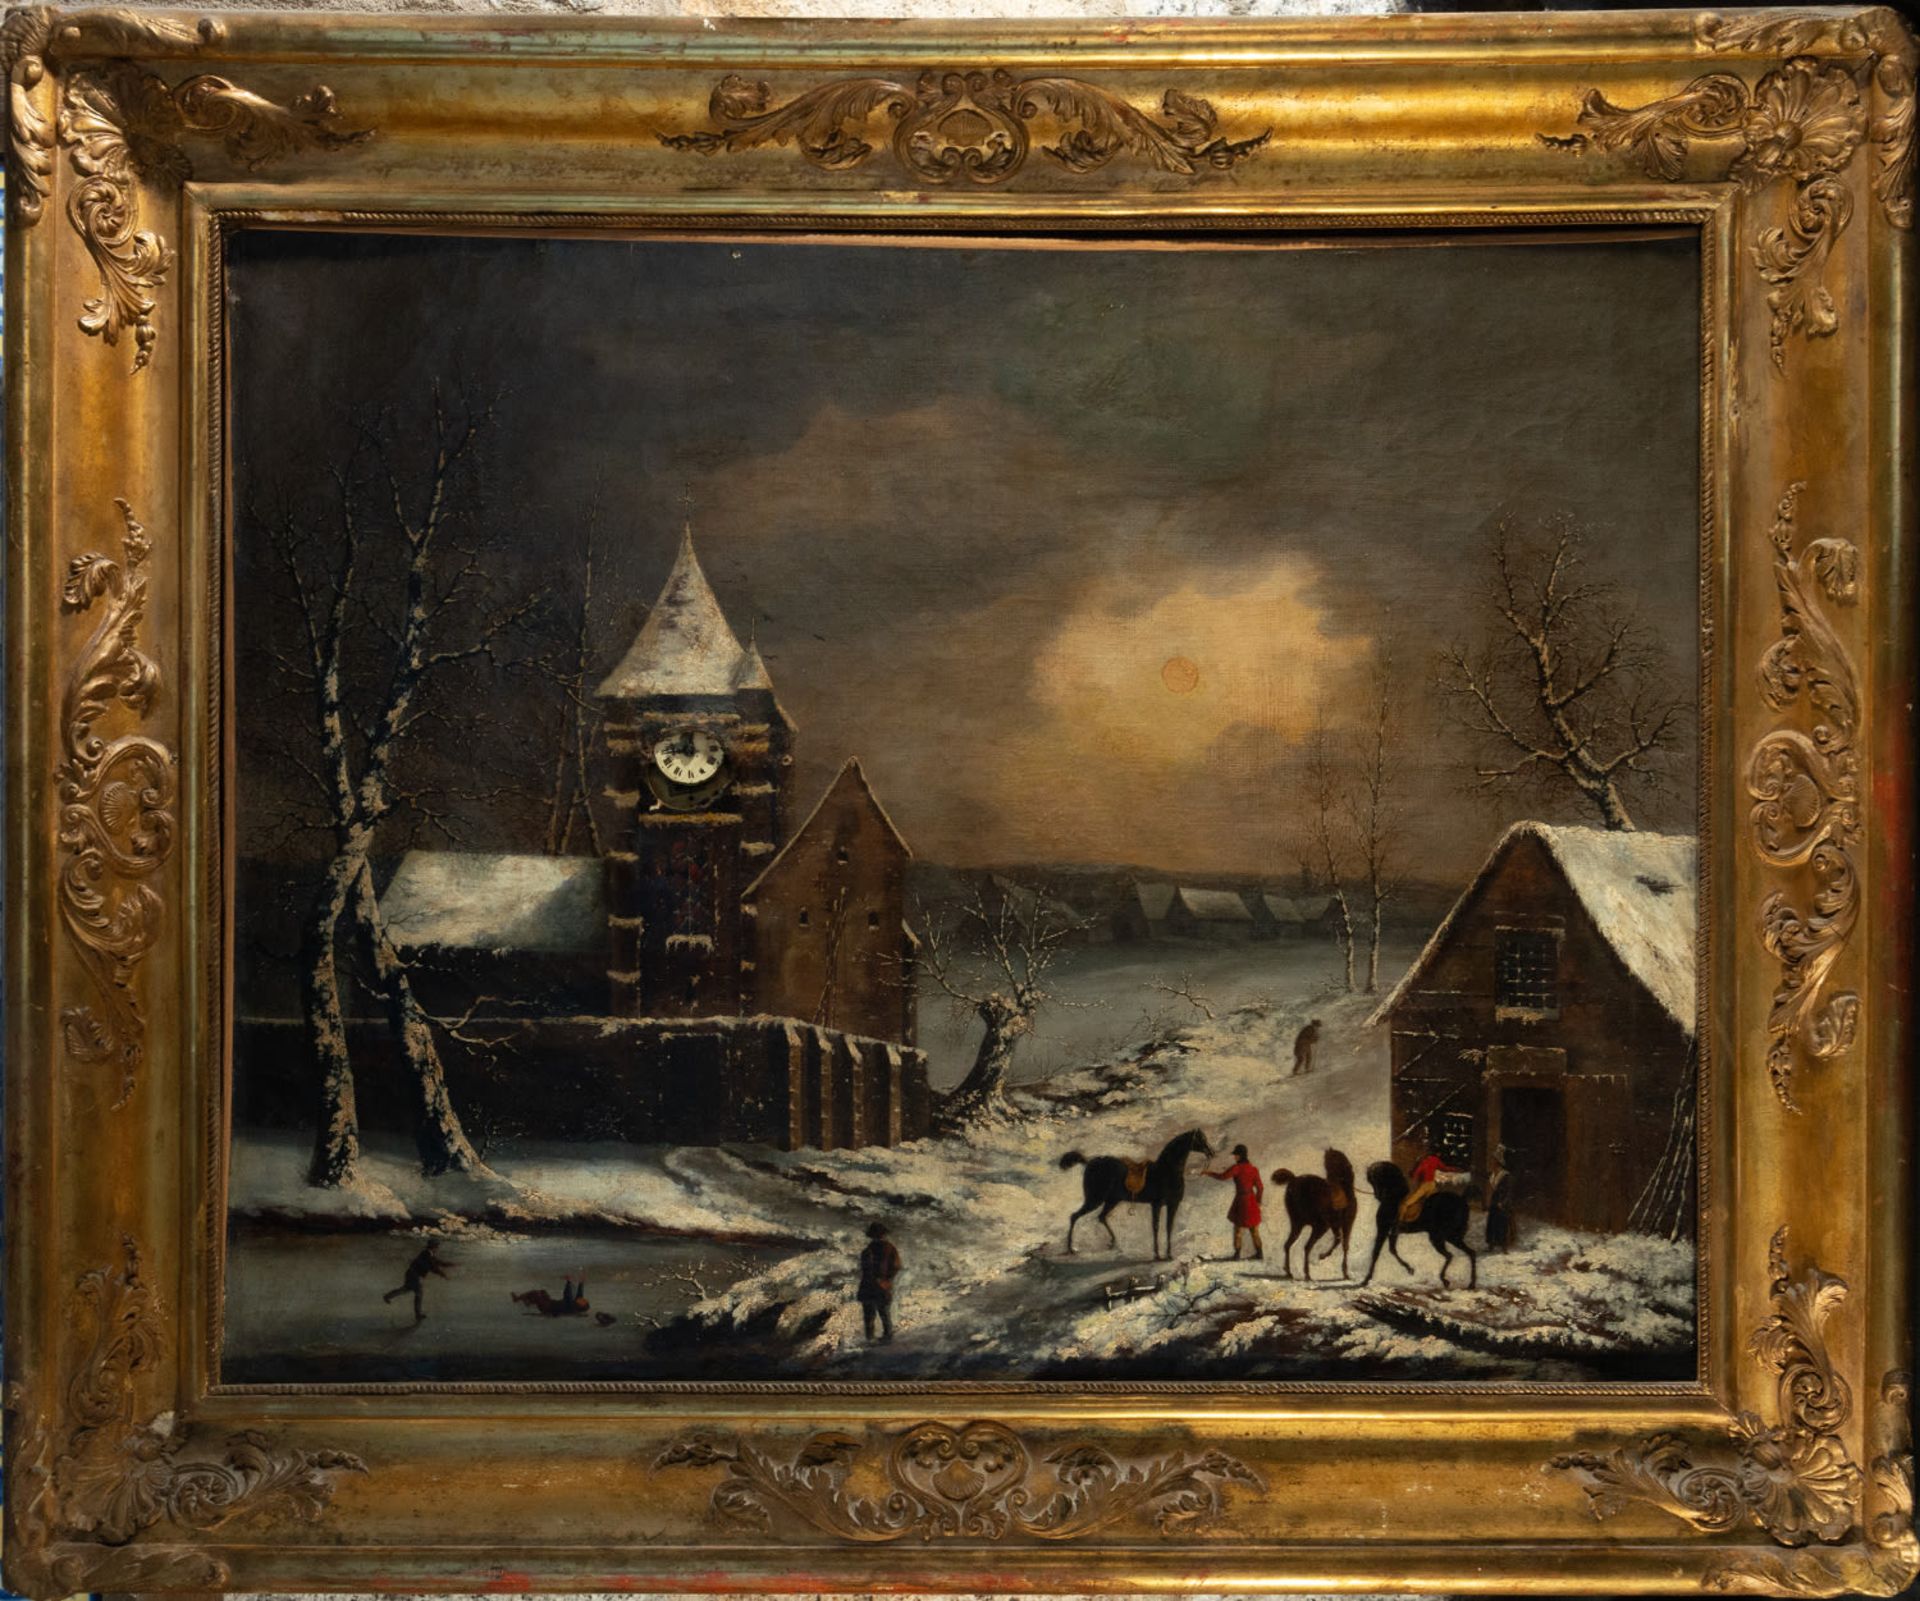 Winter Landscape with built-in clock, German or Austrian school, 19th century